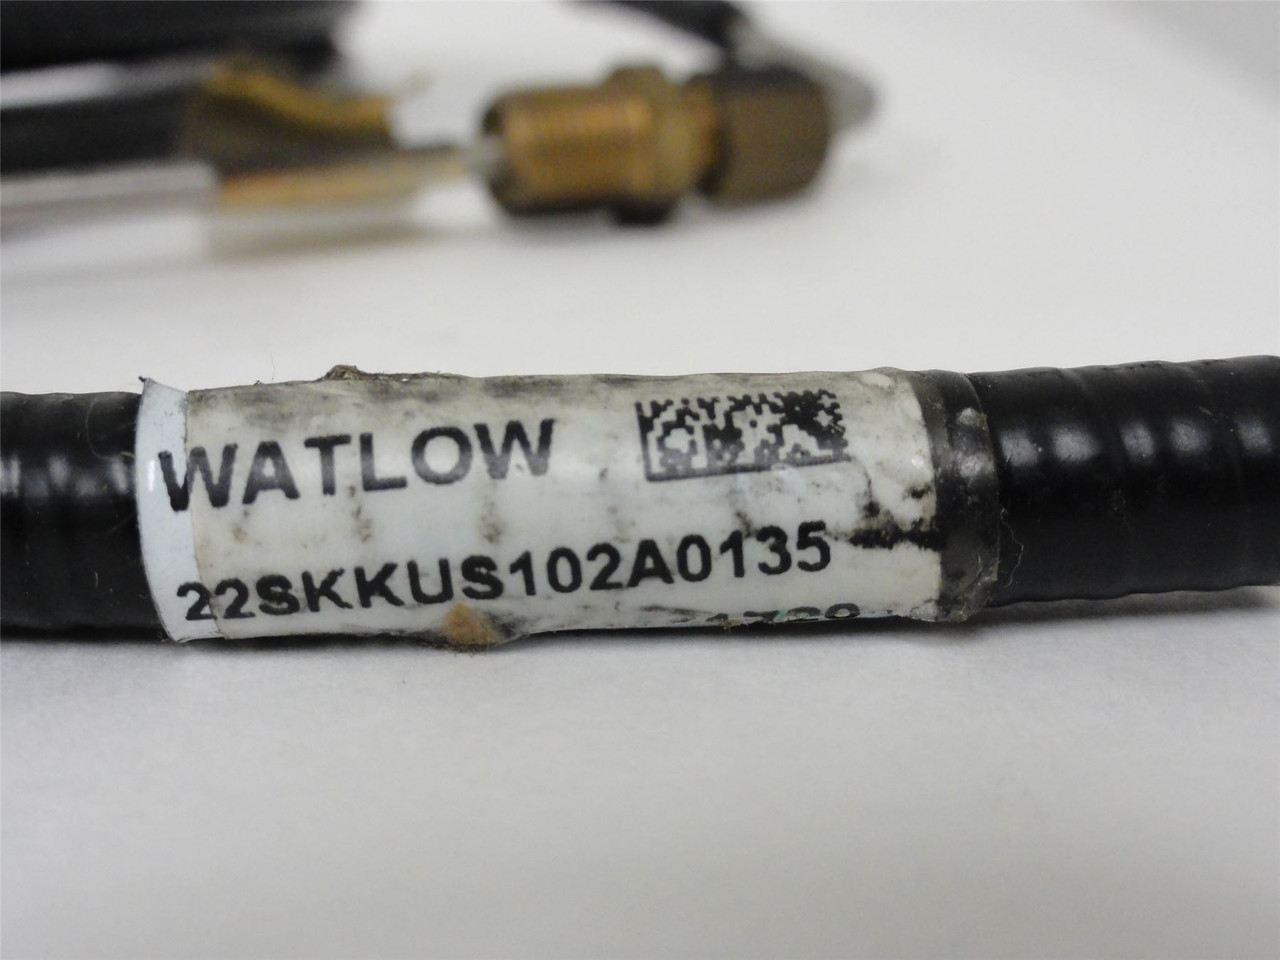 Watlow 22SKKUS102A0135; Thermocouple